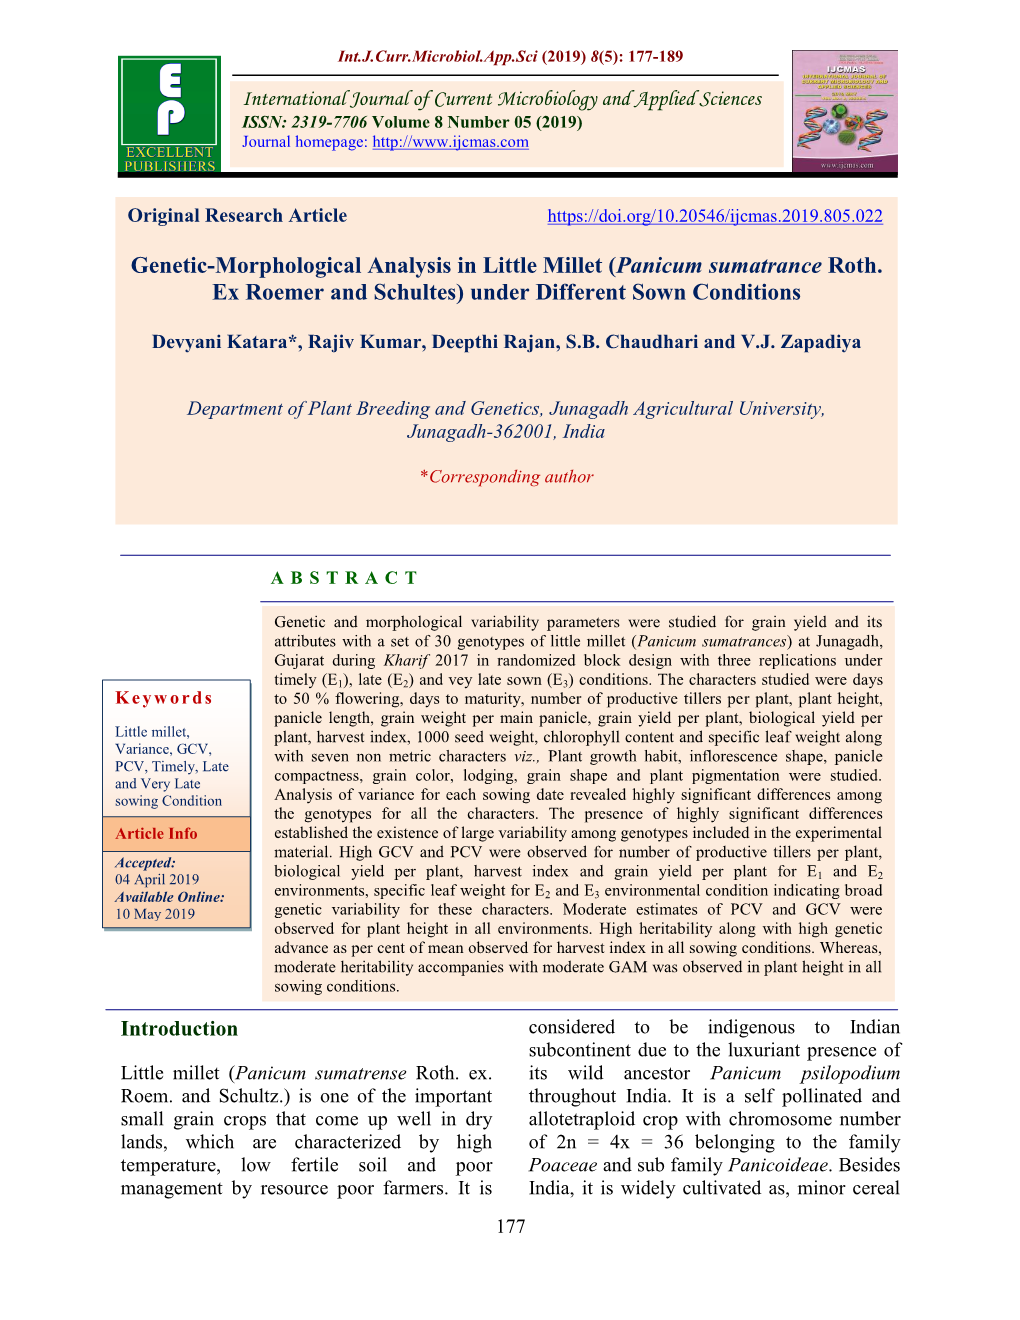 Genetic-Morphological Analysis in Little Millet (Panicum Sumatrance Roth